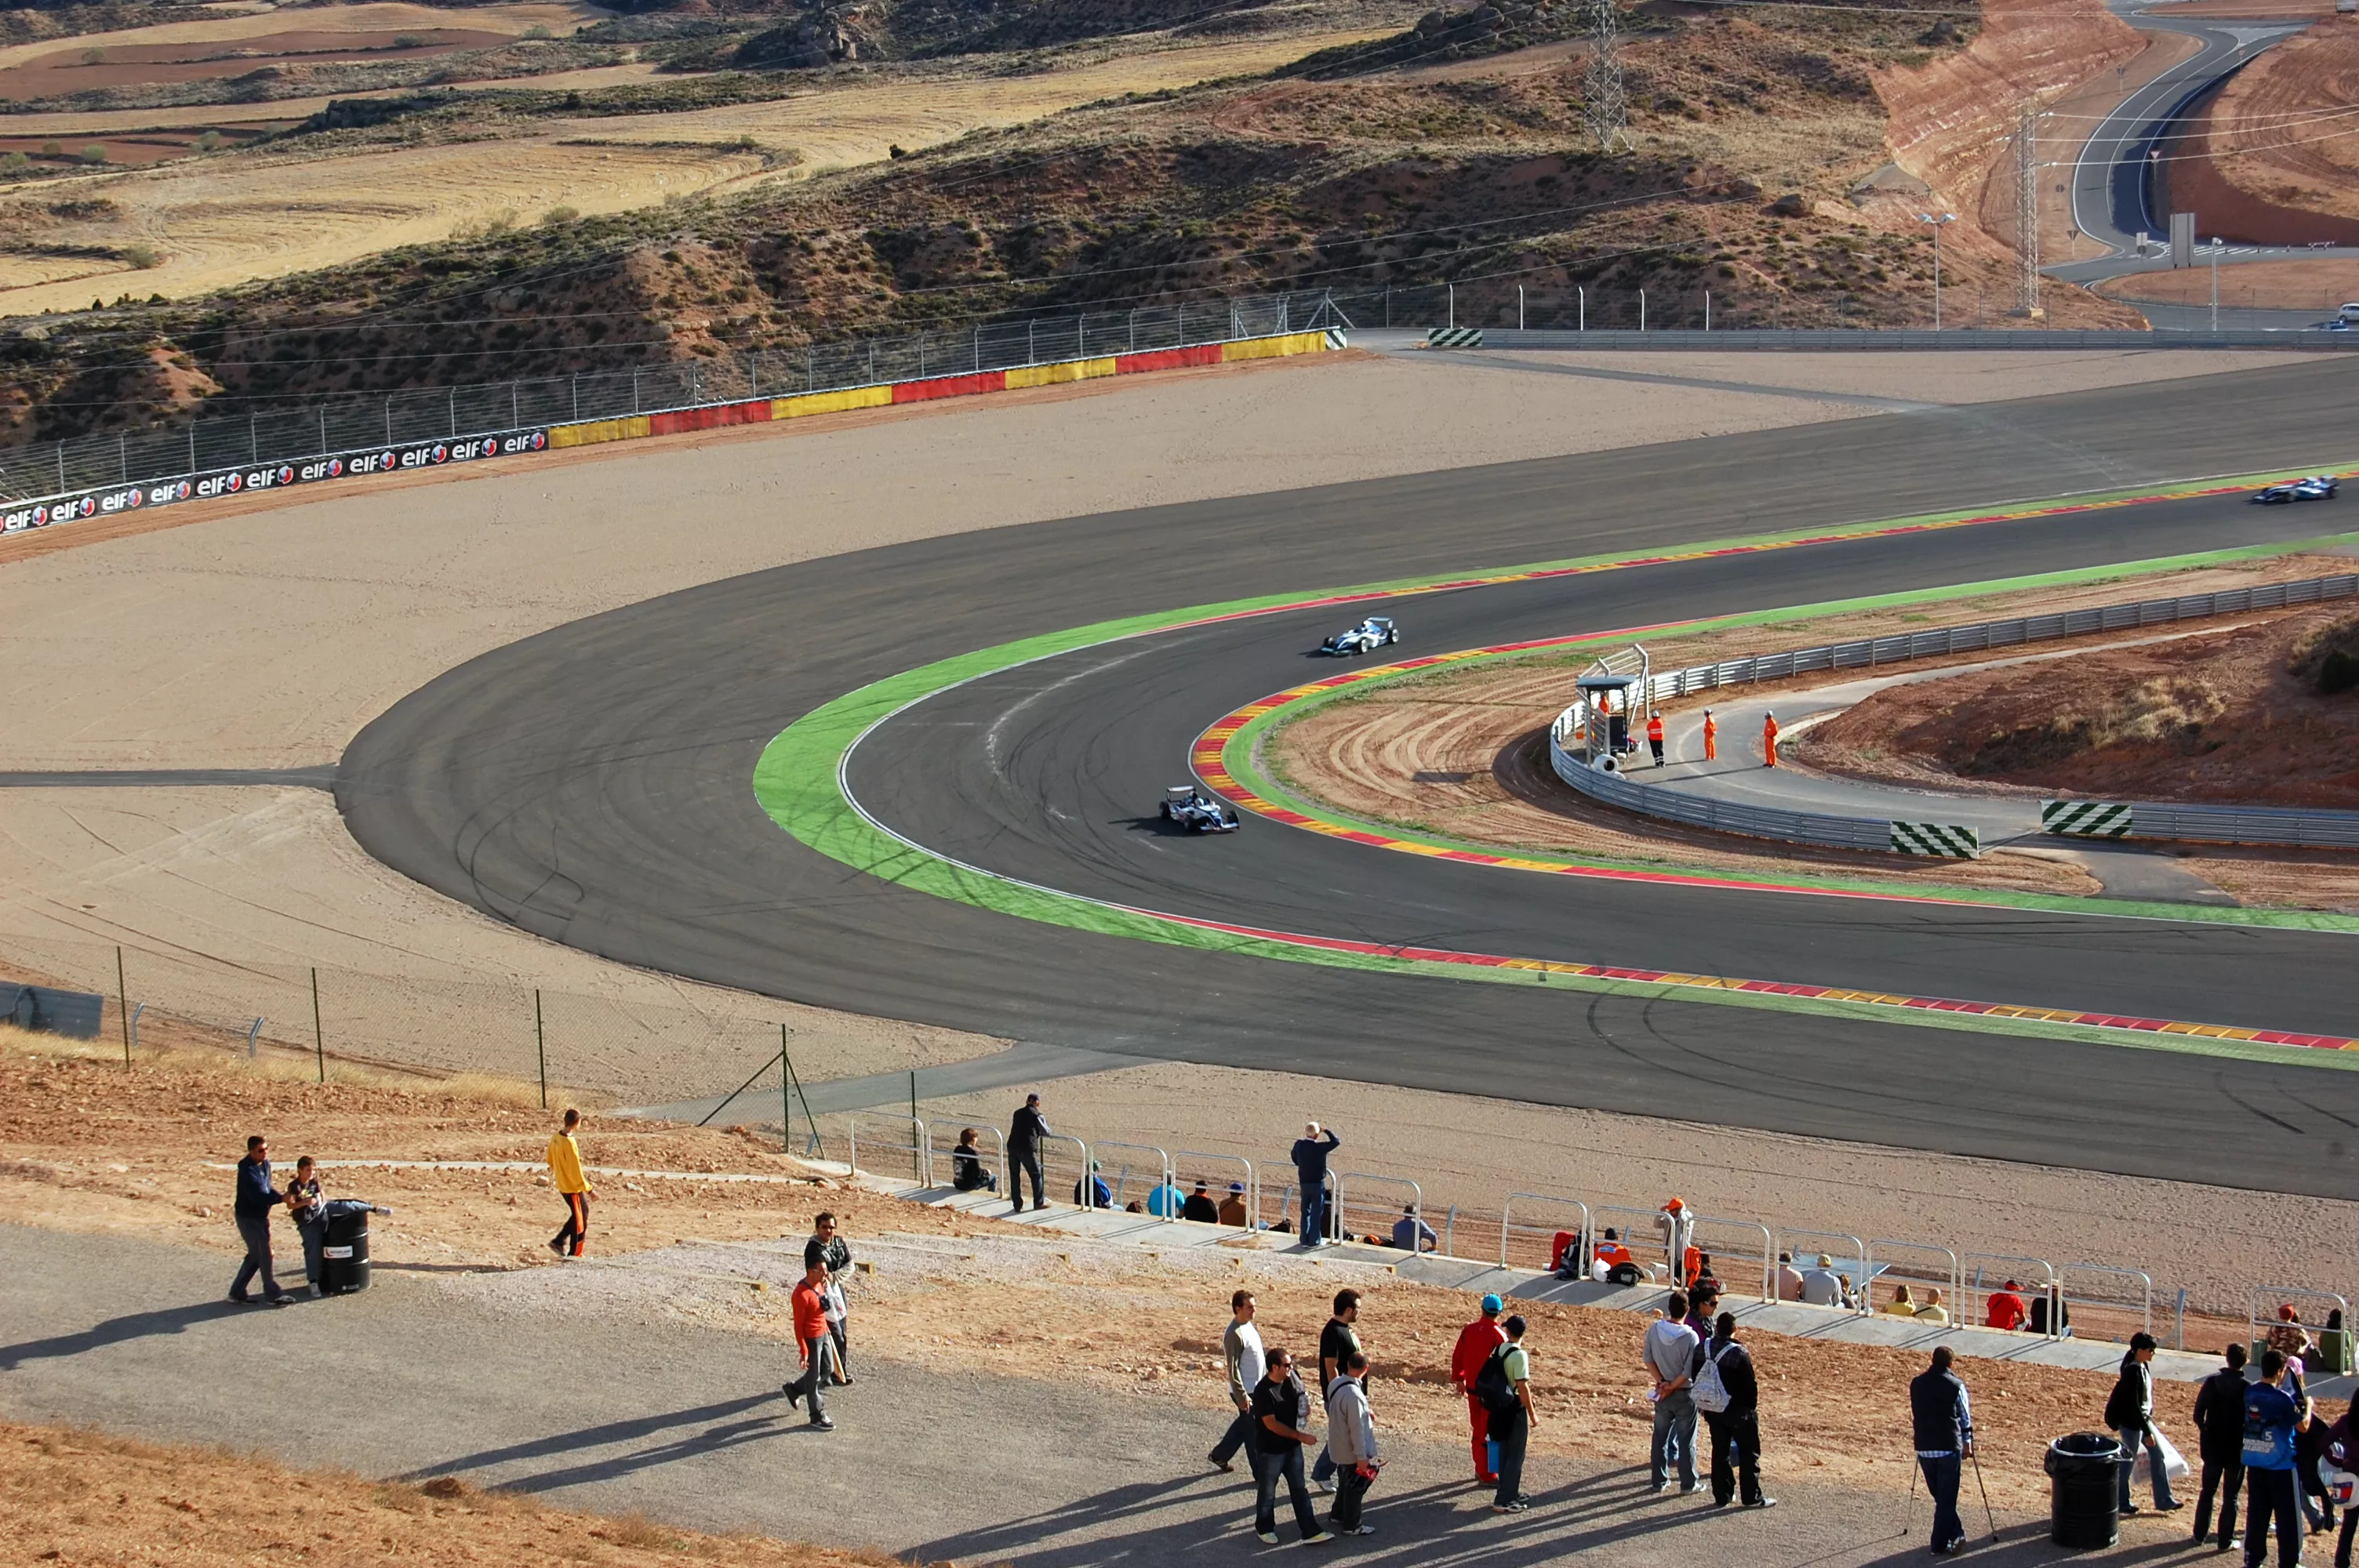 MotorLand Aragon in Spain, Europe | Racing,Motorcycles - Rated 4.3